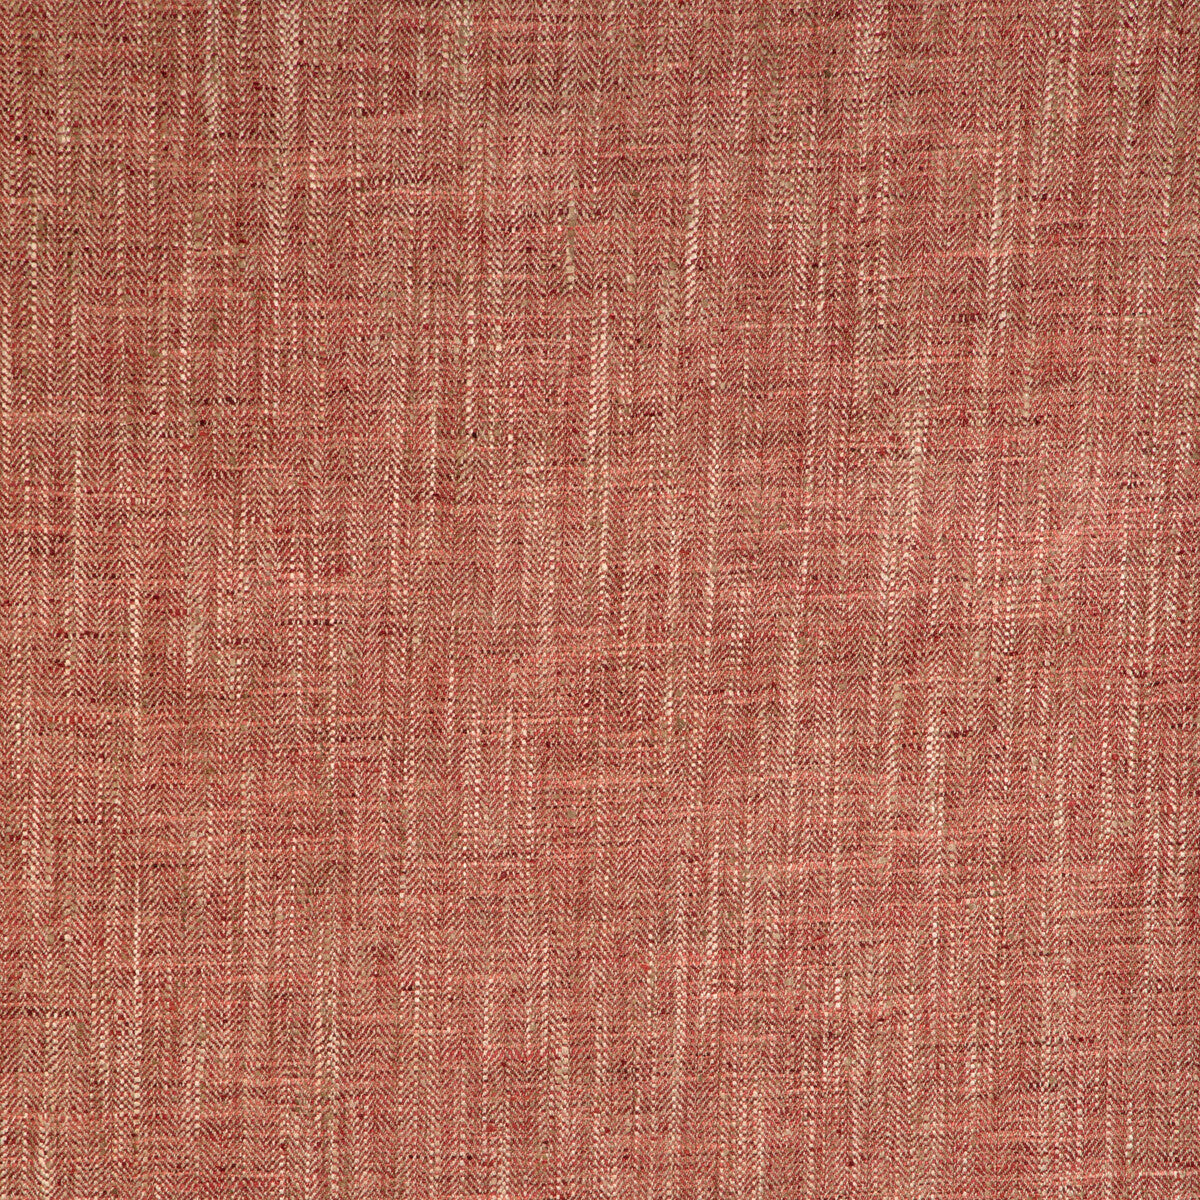 Kravet Smart fabric in 34088-77 color - pattern 34088.77.0 - by Kravet Smart